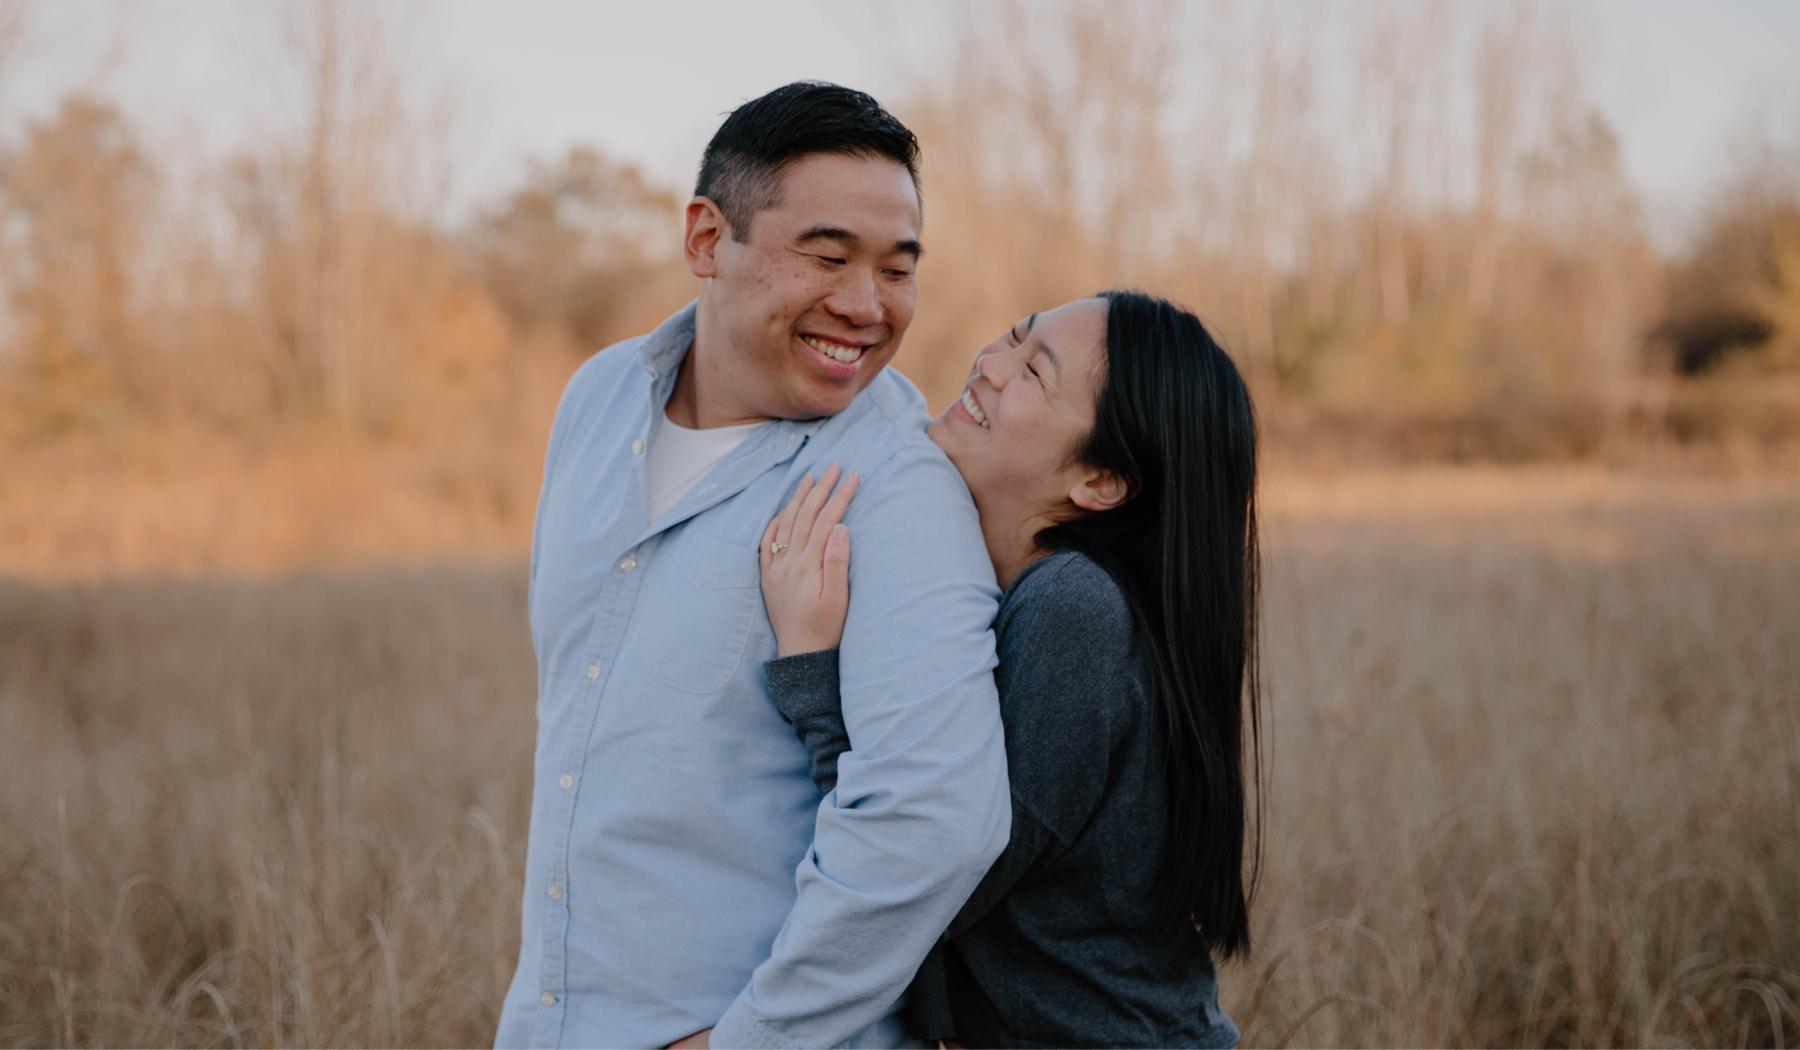 The Wedding Website of Melanie Wong and Jason Tran